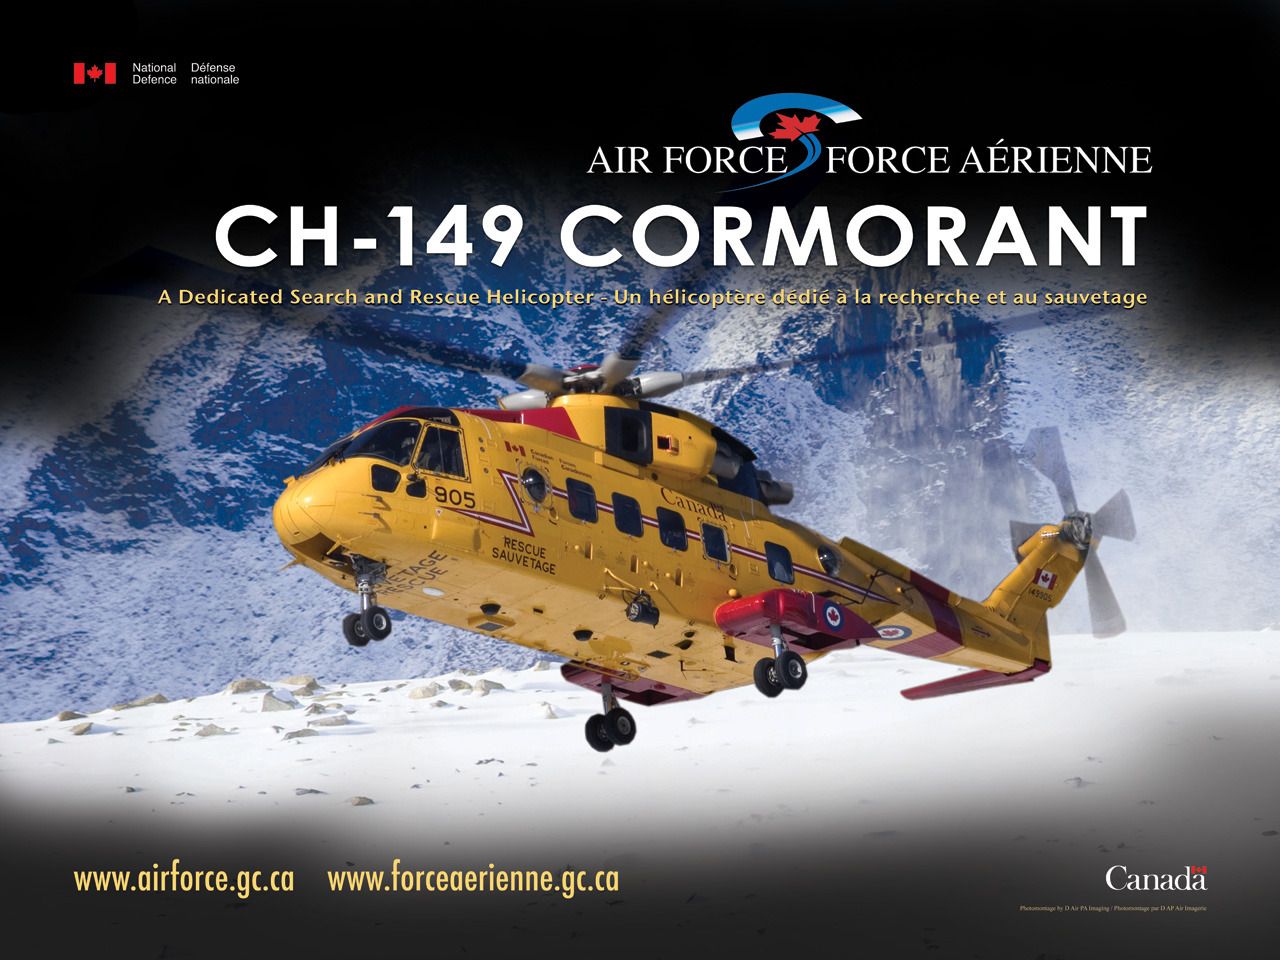 Air-Force-Force-Aerienne-CH-149-Cormorant-Search-and-Rescue-Helicopter-Helicoptere-de-recherche-et-sauvetage-21_zps97gnazyl.jpg